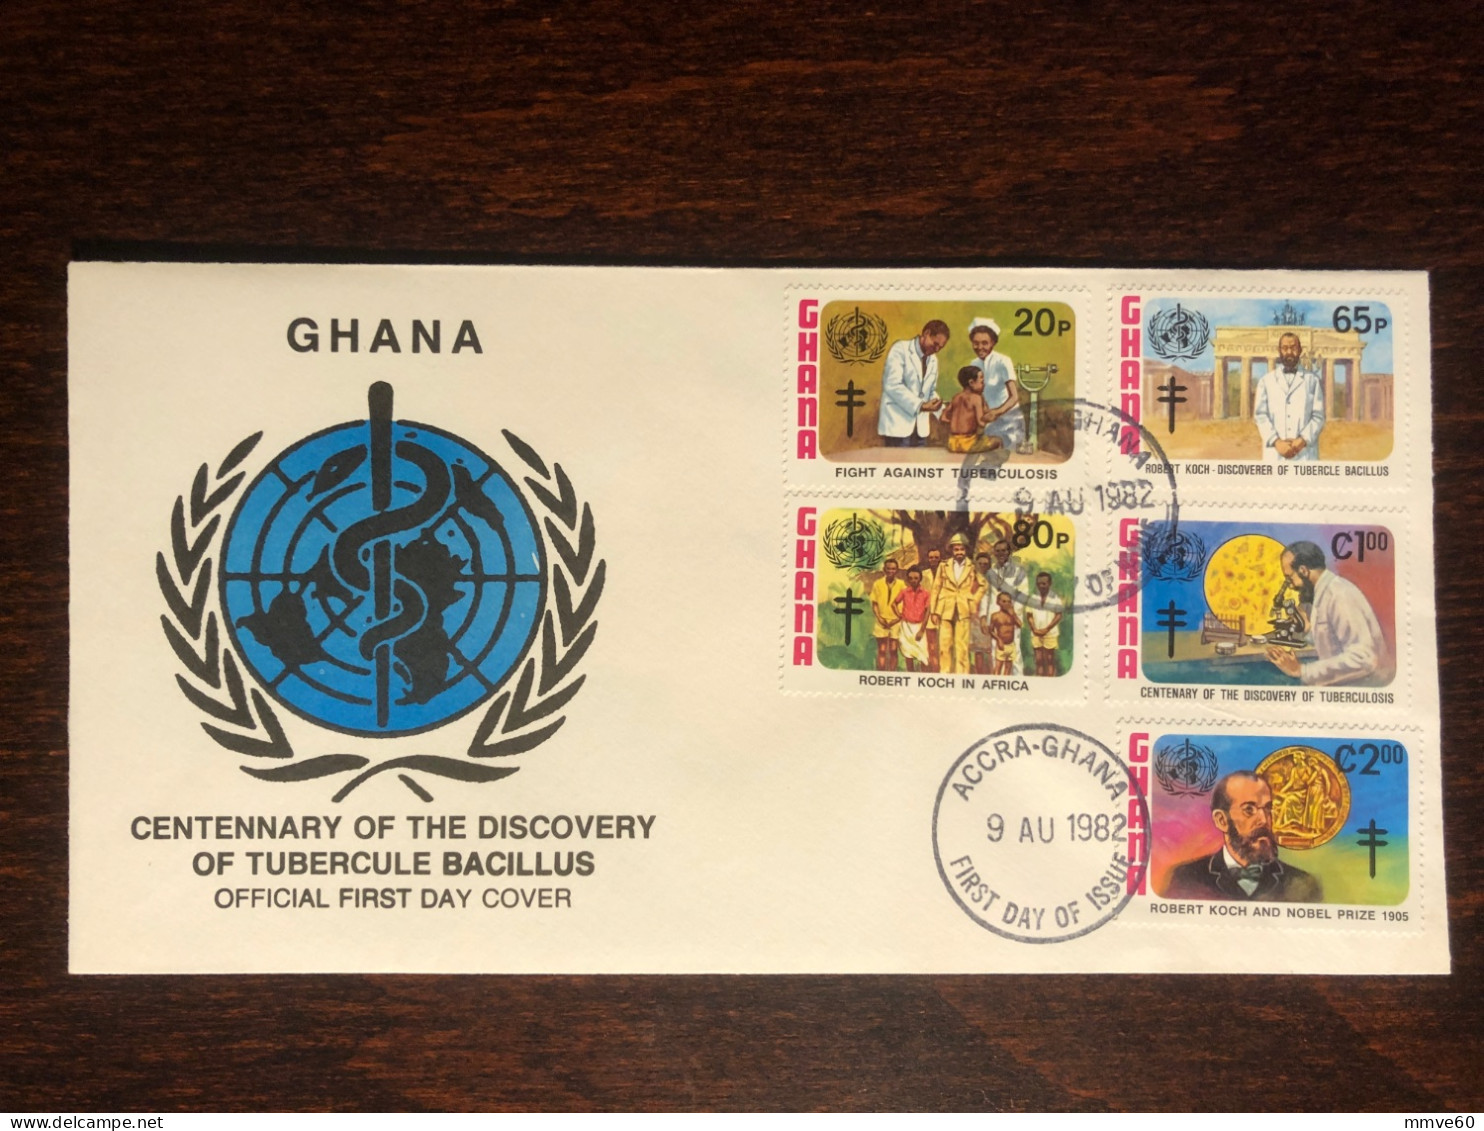 GHANA FDC COVER 1982 YEAR KOCH TUBERCULOSIS HEALTH MEDICINE STAMPS - Ghana (1957-...)